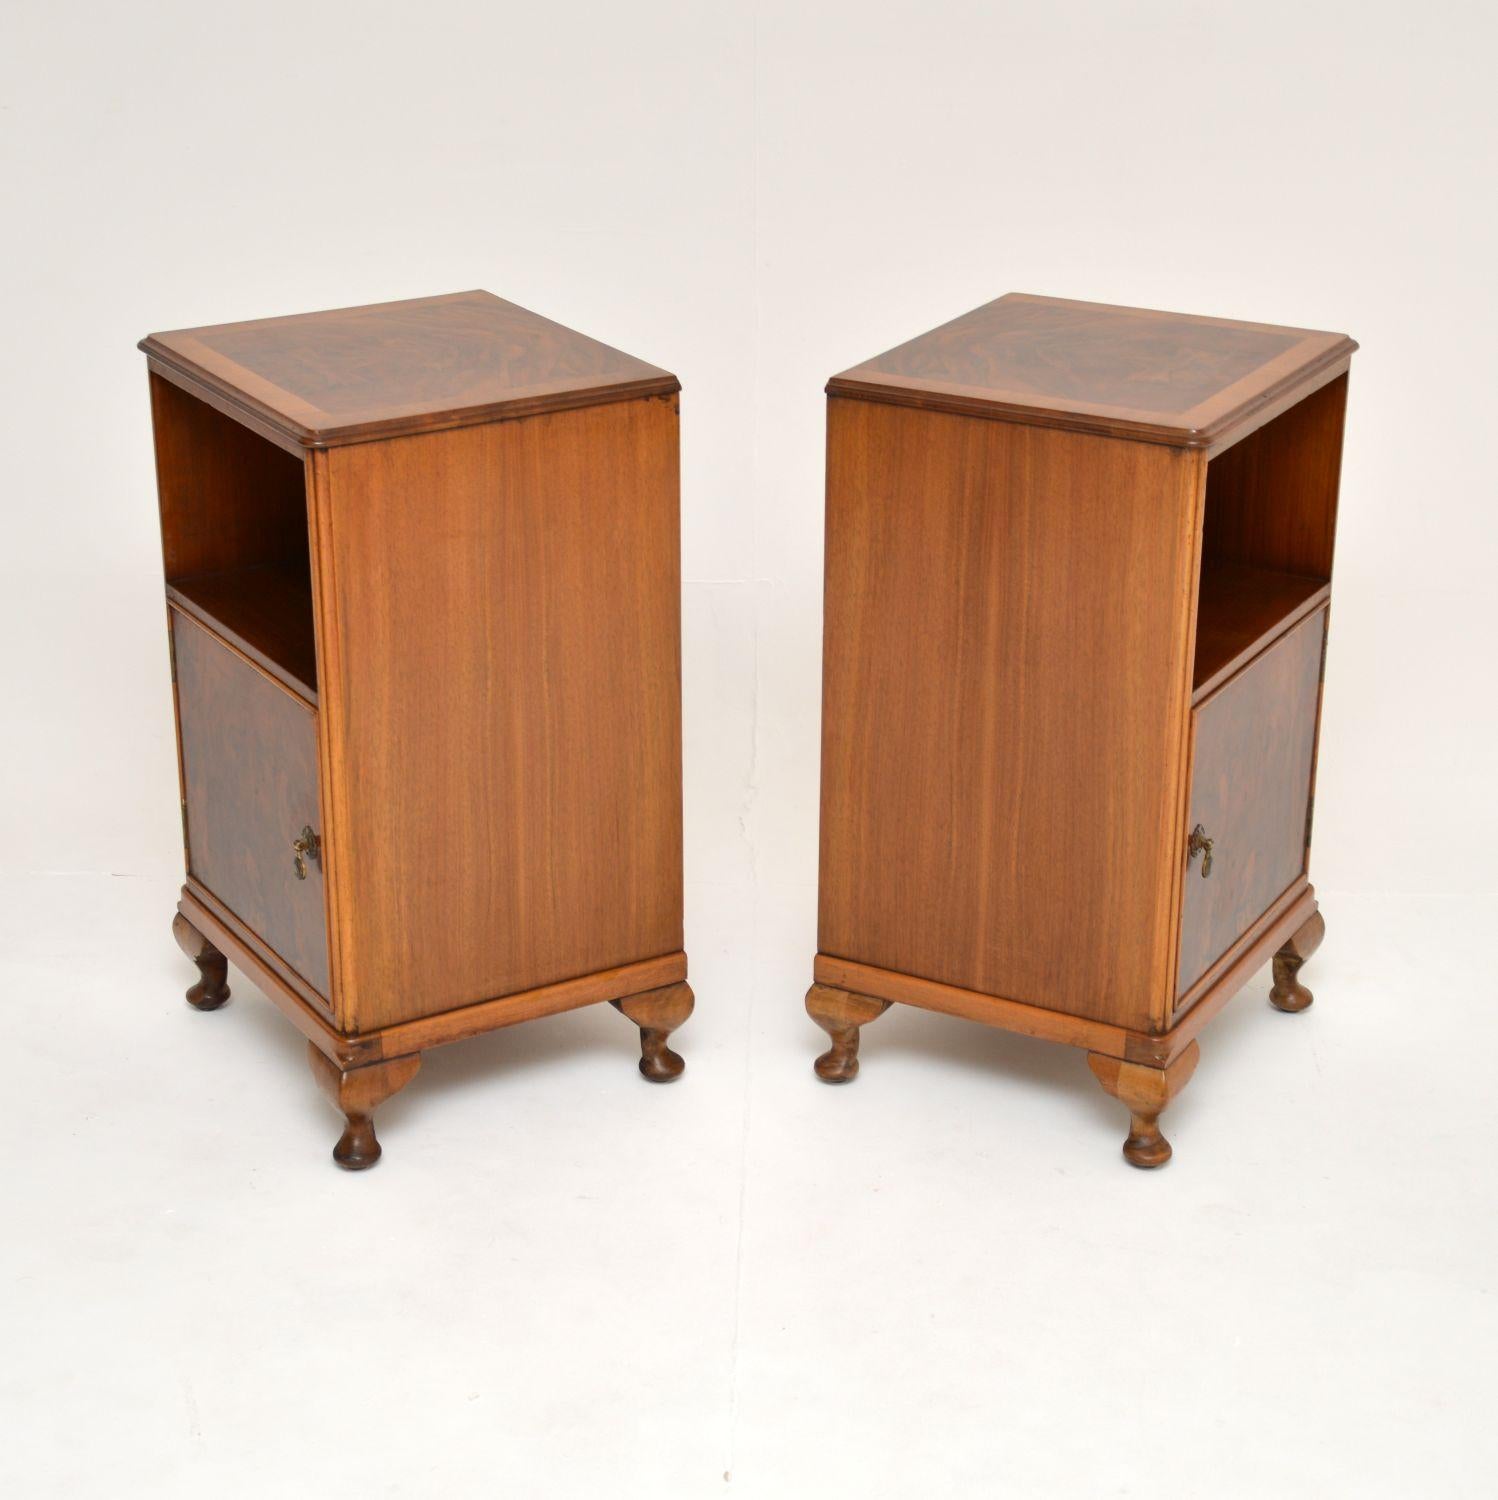 British Pair of Antique Figured Walnut Bedside Cabinets